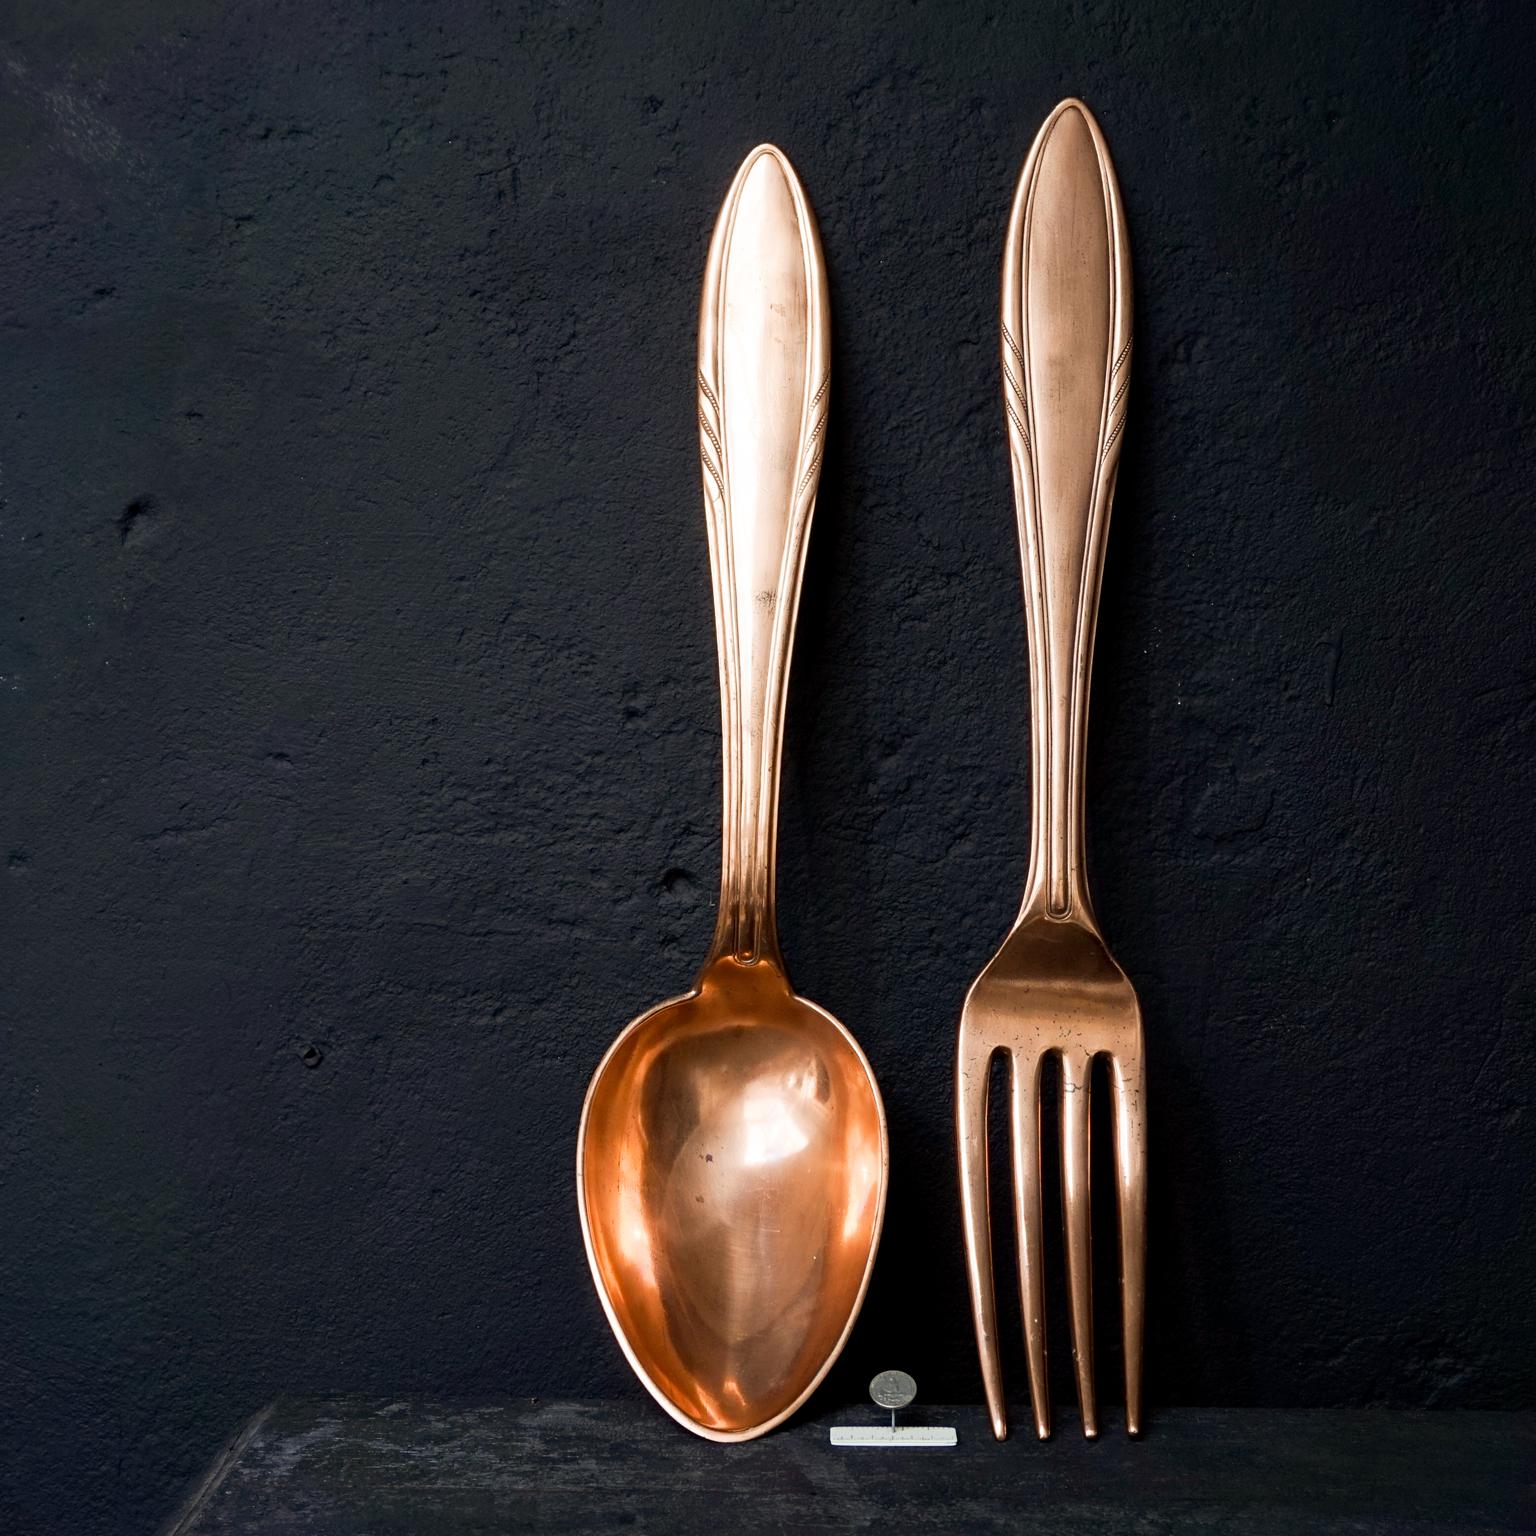 giant cutlery